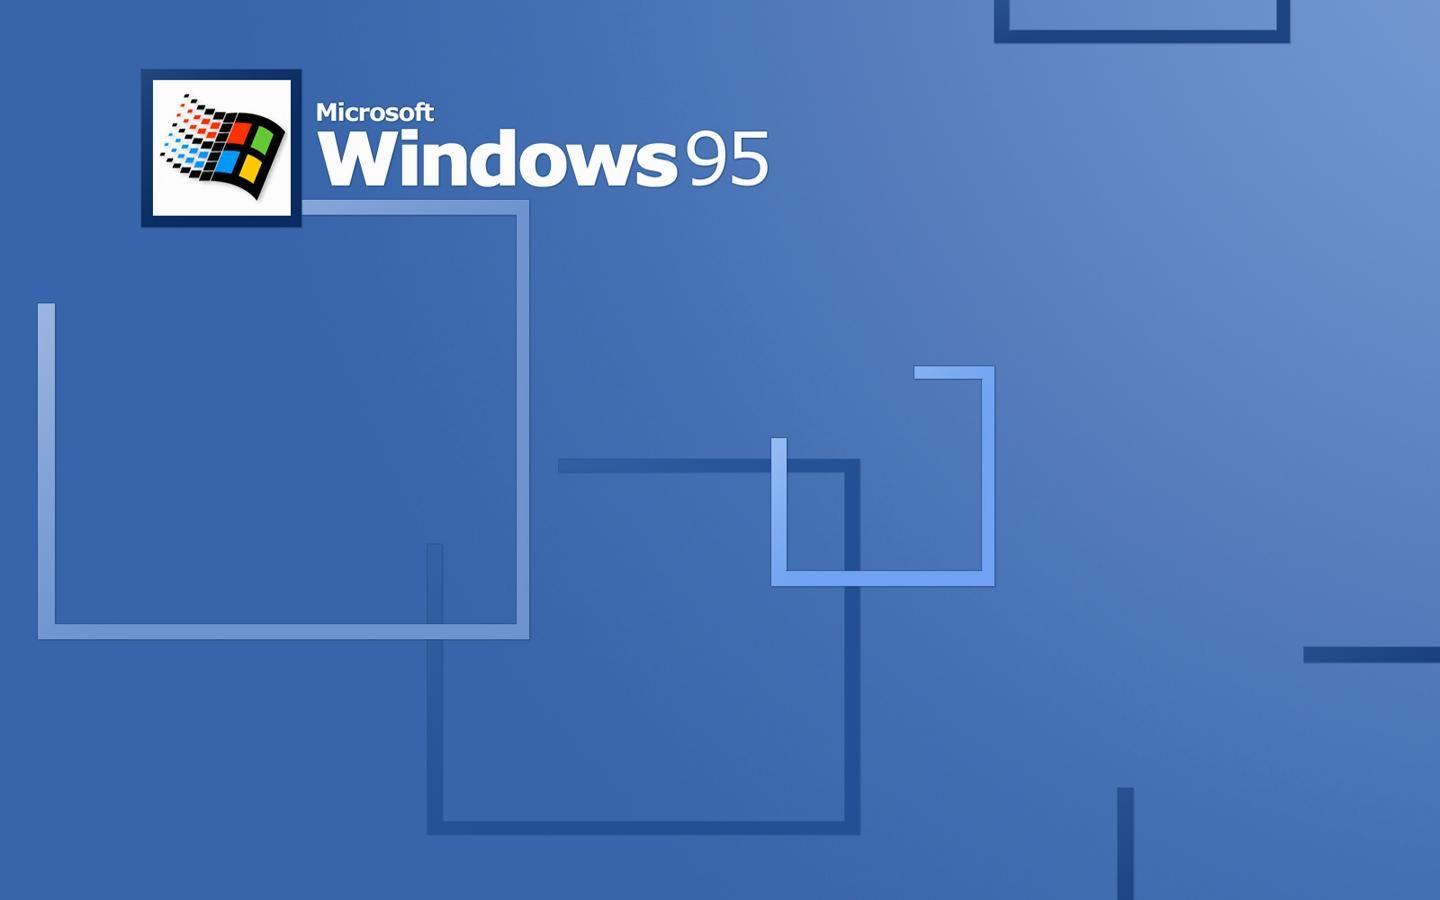 windows 95 desktop background 5. Background Check All